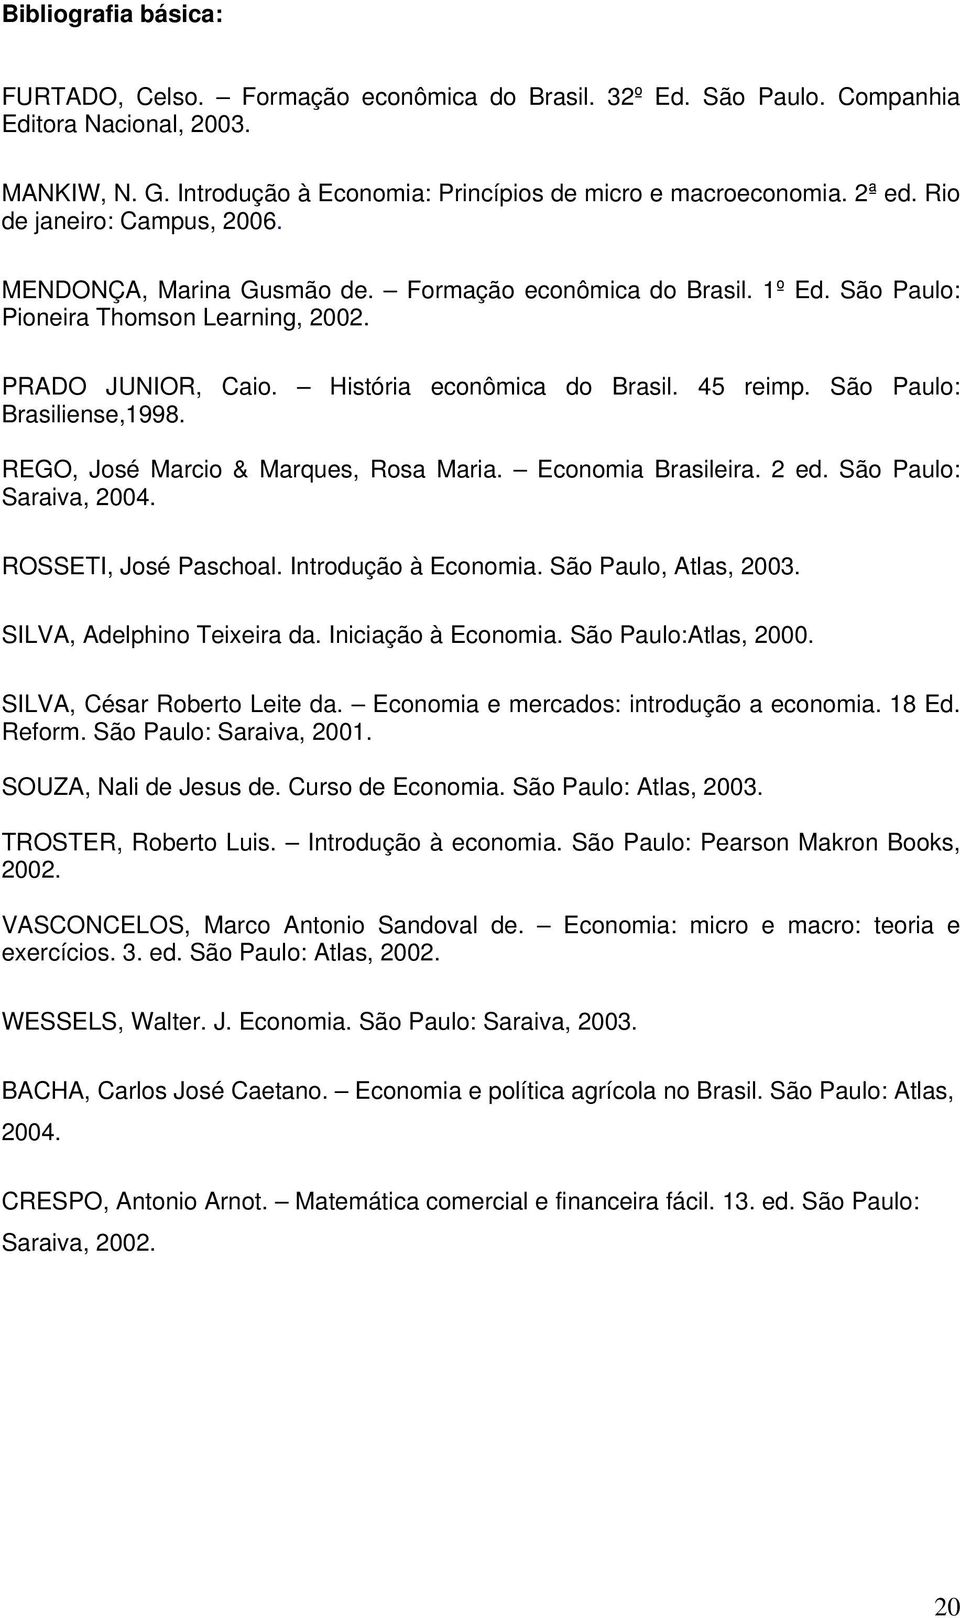 São Paulo: Brasiliense,1998. REGO, José Marcio & Marques, Rosa Maria. Economia Brasileira. 2 ed. São Paulo: Saraiva, 2004. ROSSETI, José Paschoal. Introdução à Economia. São Paulo, Atlas, 2003.